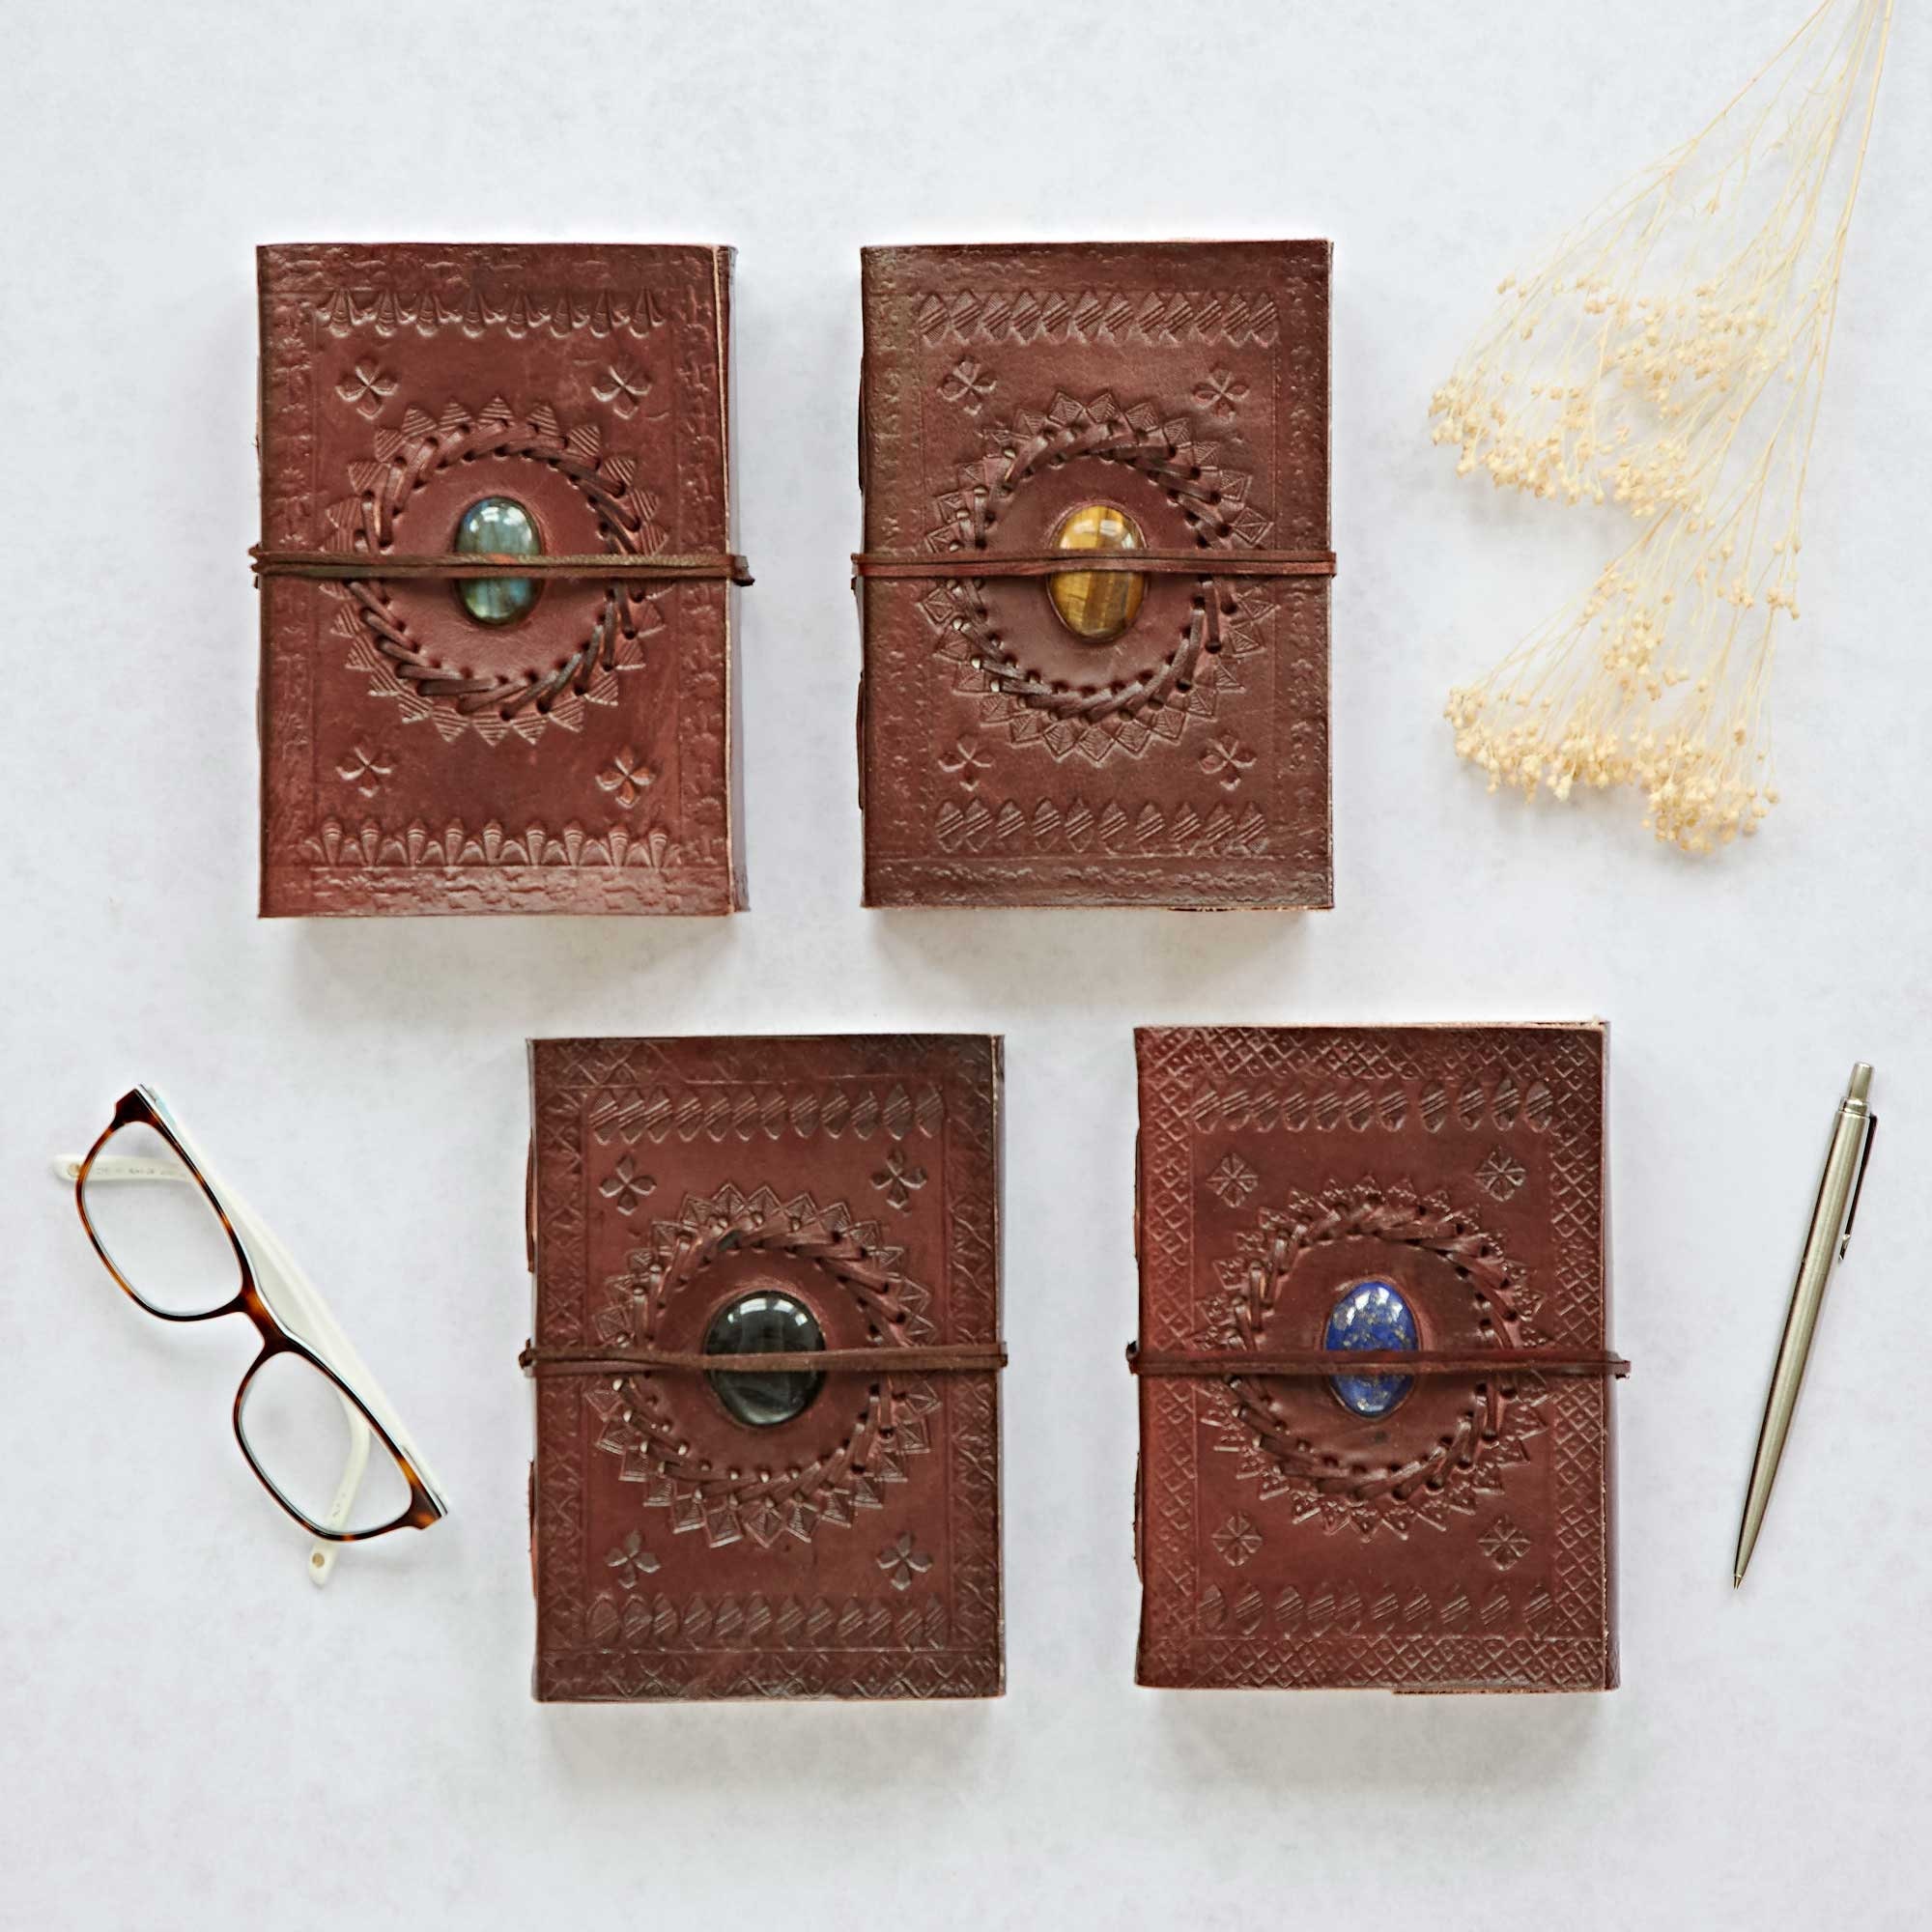  NomadCraftsCo. Vintage Journal - Leather Journal - Semi  Precious Stones, Vintage Leather Bound Journal For Women Men, Journaling,  Sketchbook For Drawing, Vintage